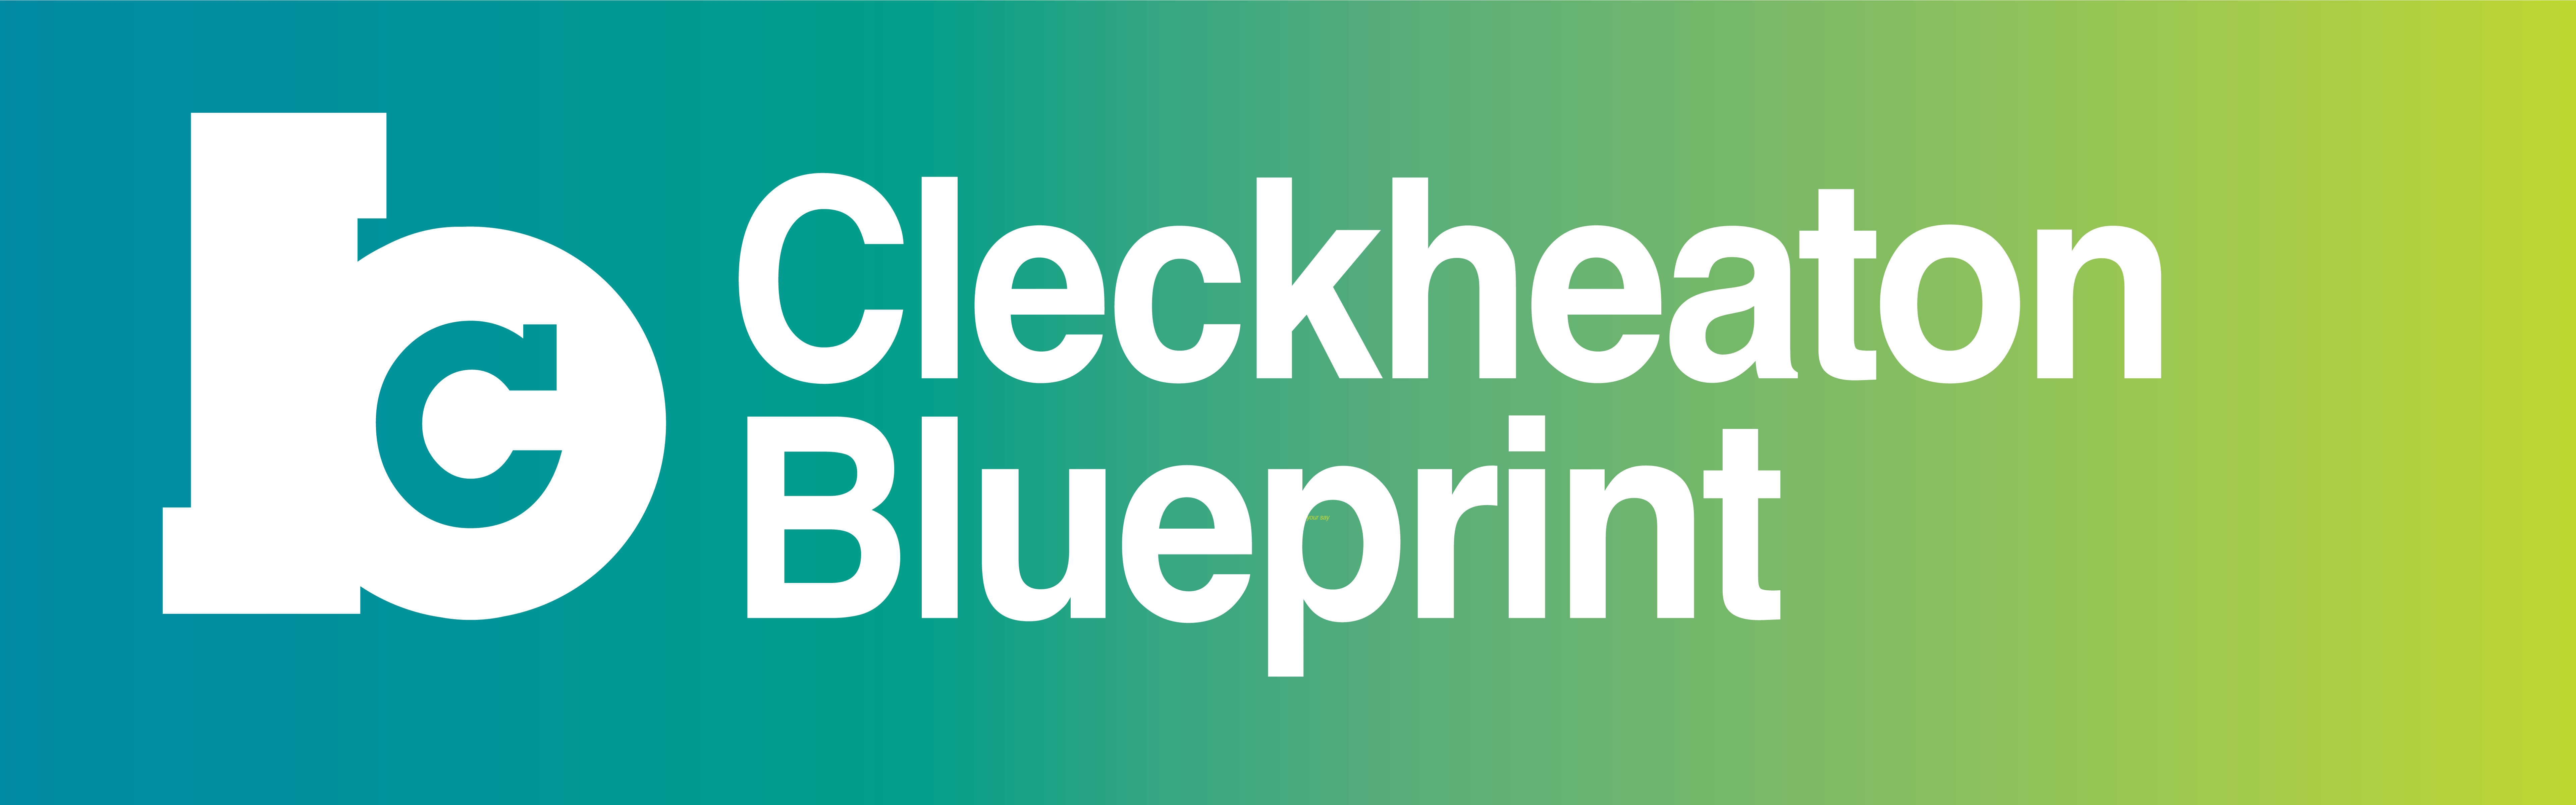 Cleckheaton Blueprint Banner